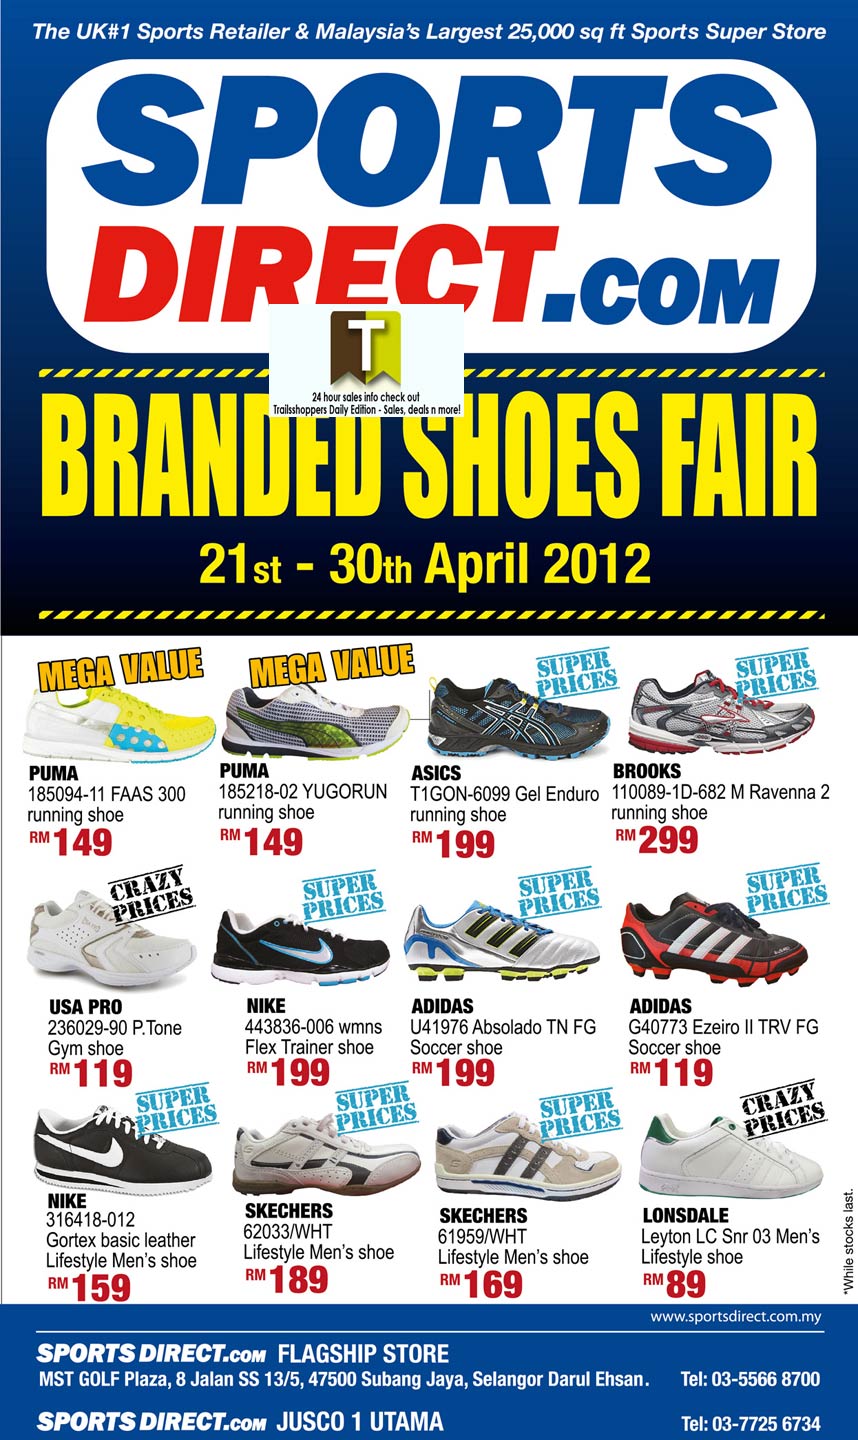 SportsDirect com Branded Shoes Fair END 30 APR 2012 